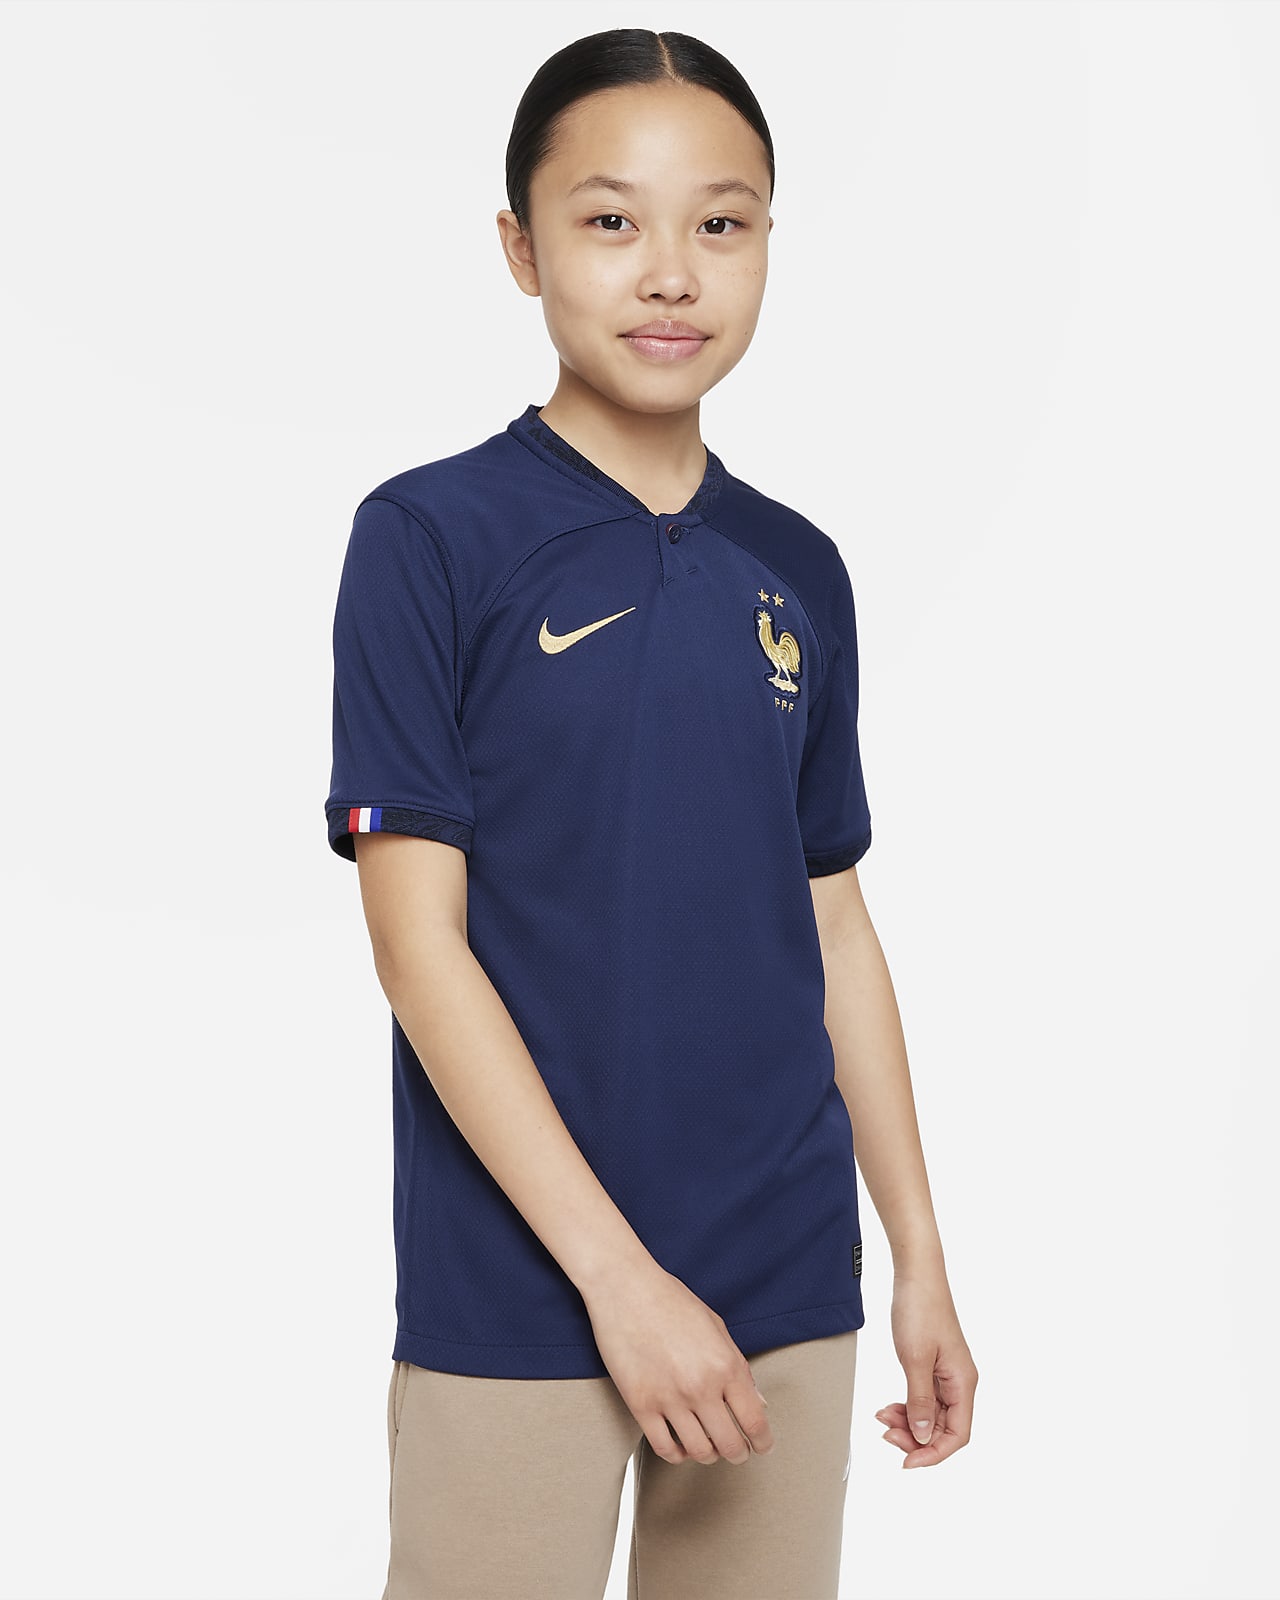 FFF 2022/23 Stadium Thuis Nike Dri-FIT voetbalshirt voor kids